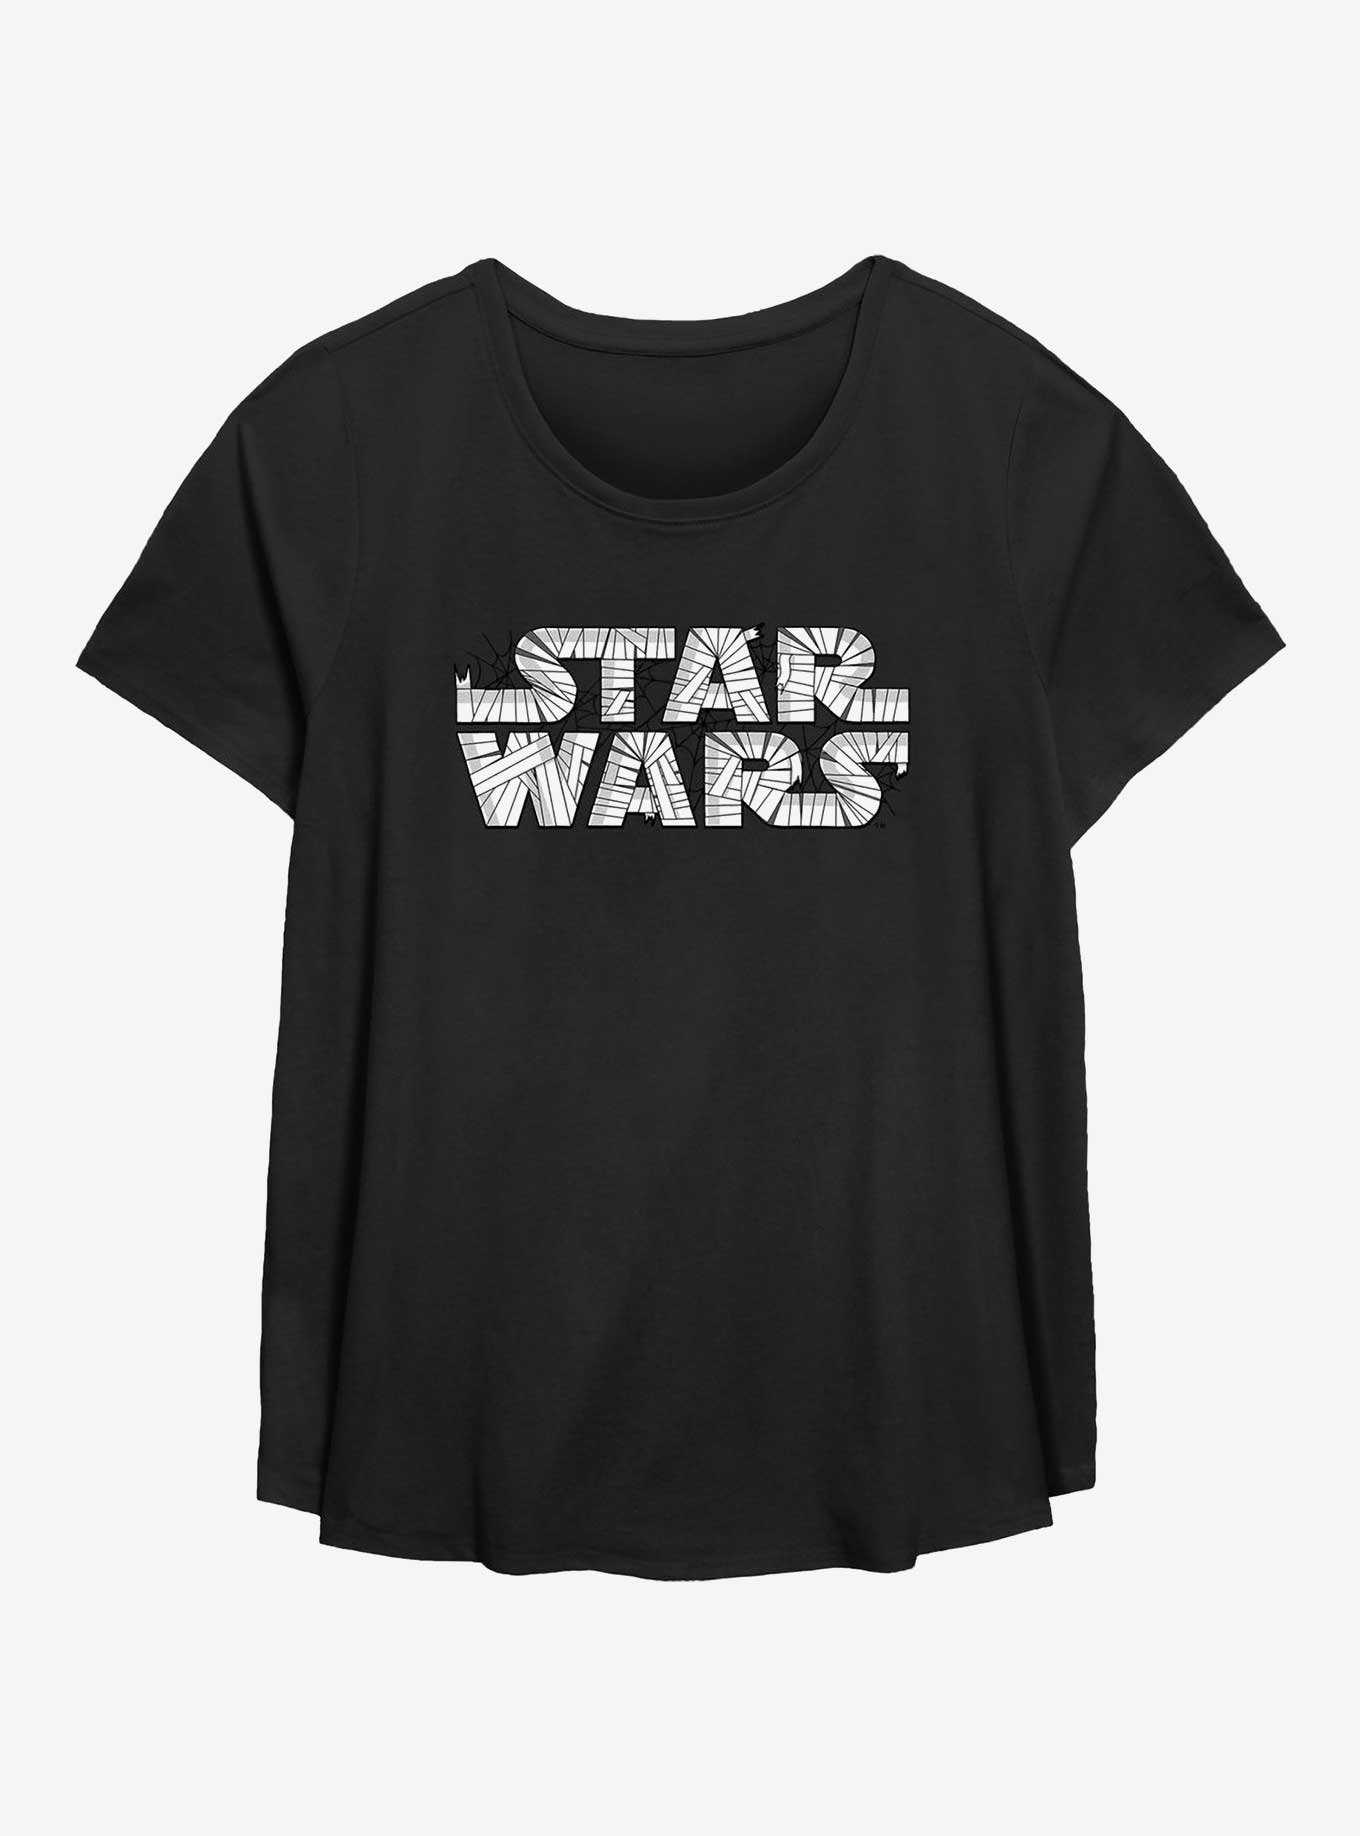 Star Wars Bandage-Wrapped Logo Girls T-Shirt Plus Size, , hi-res